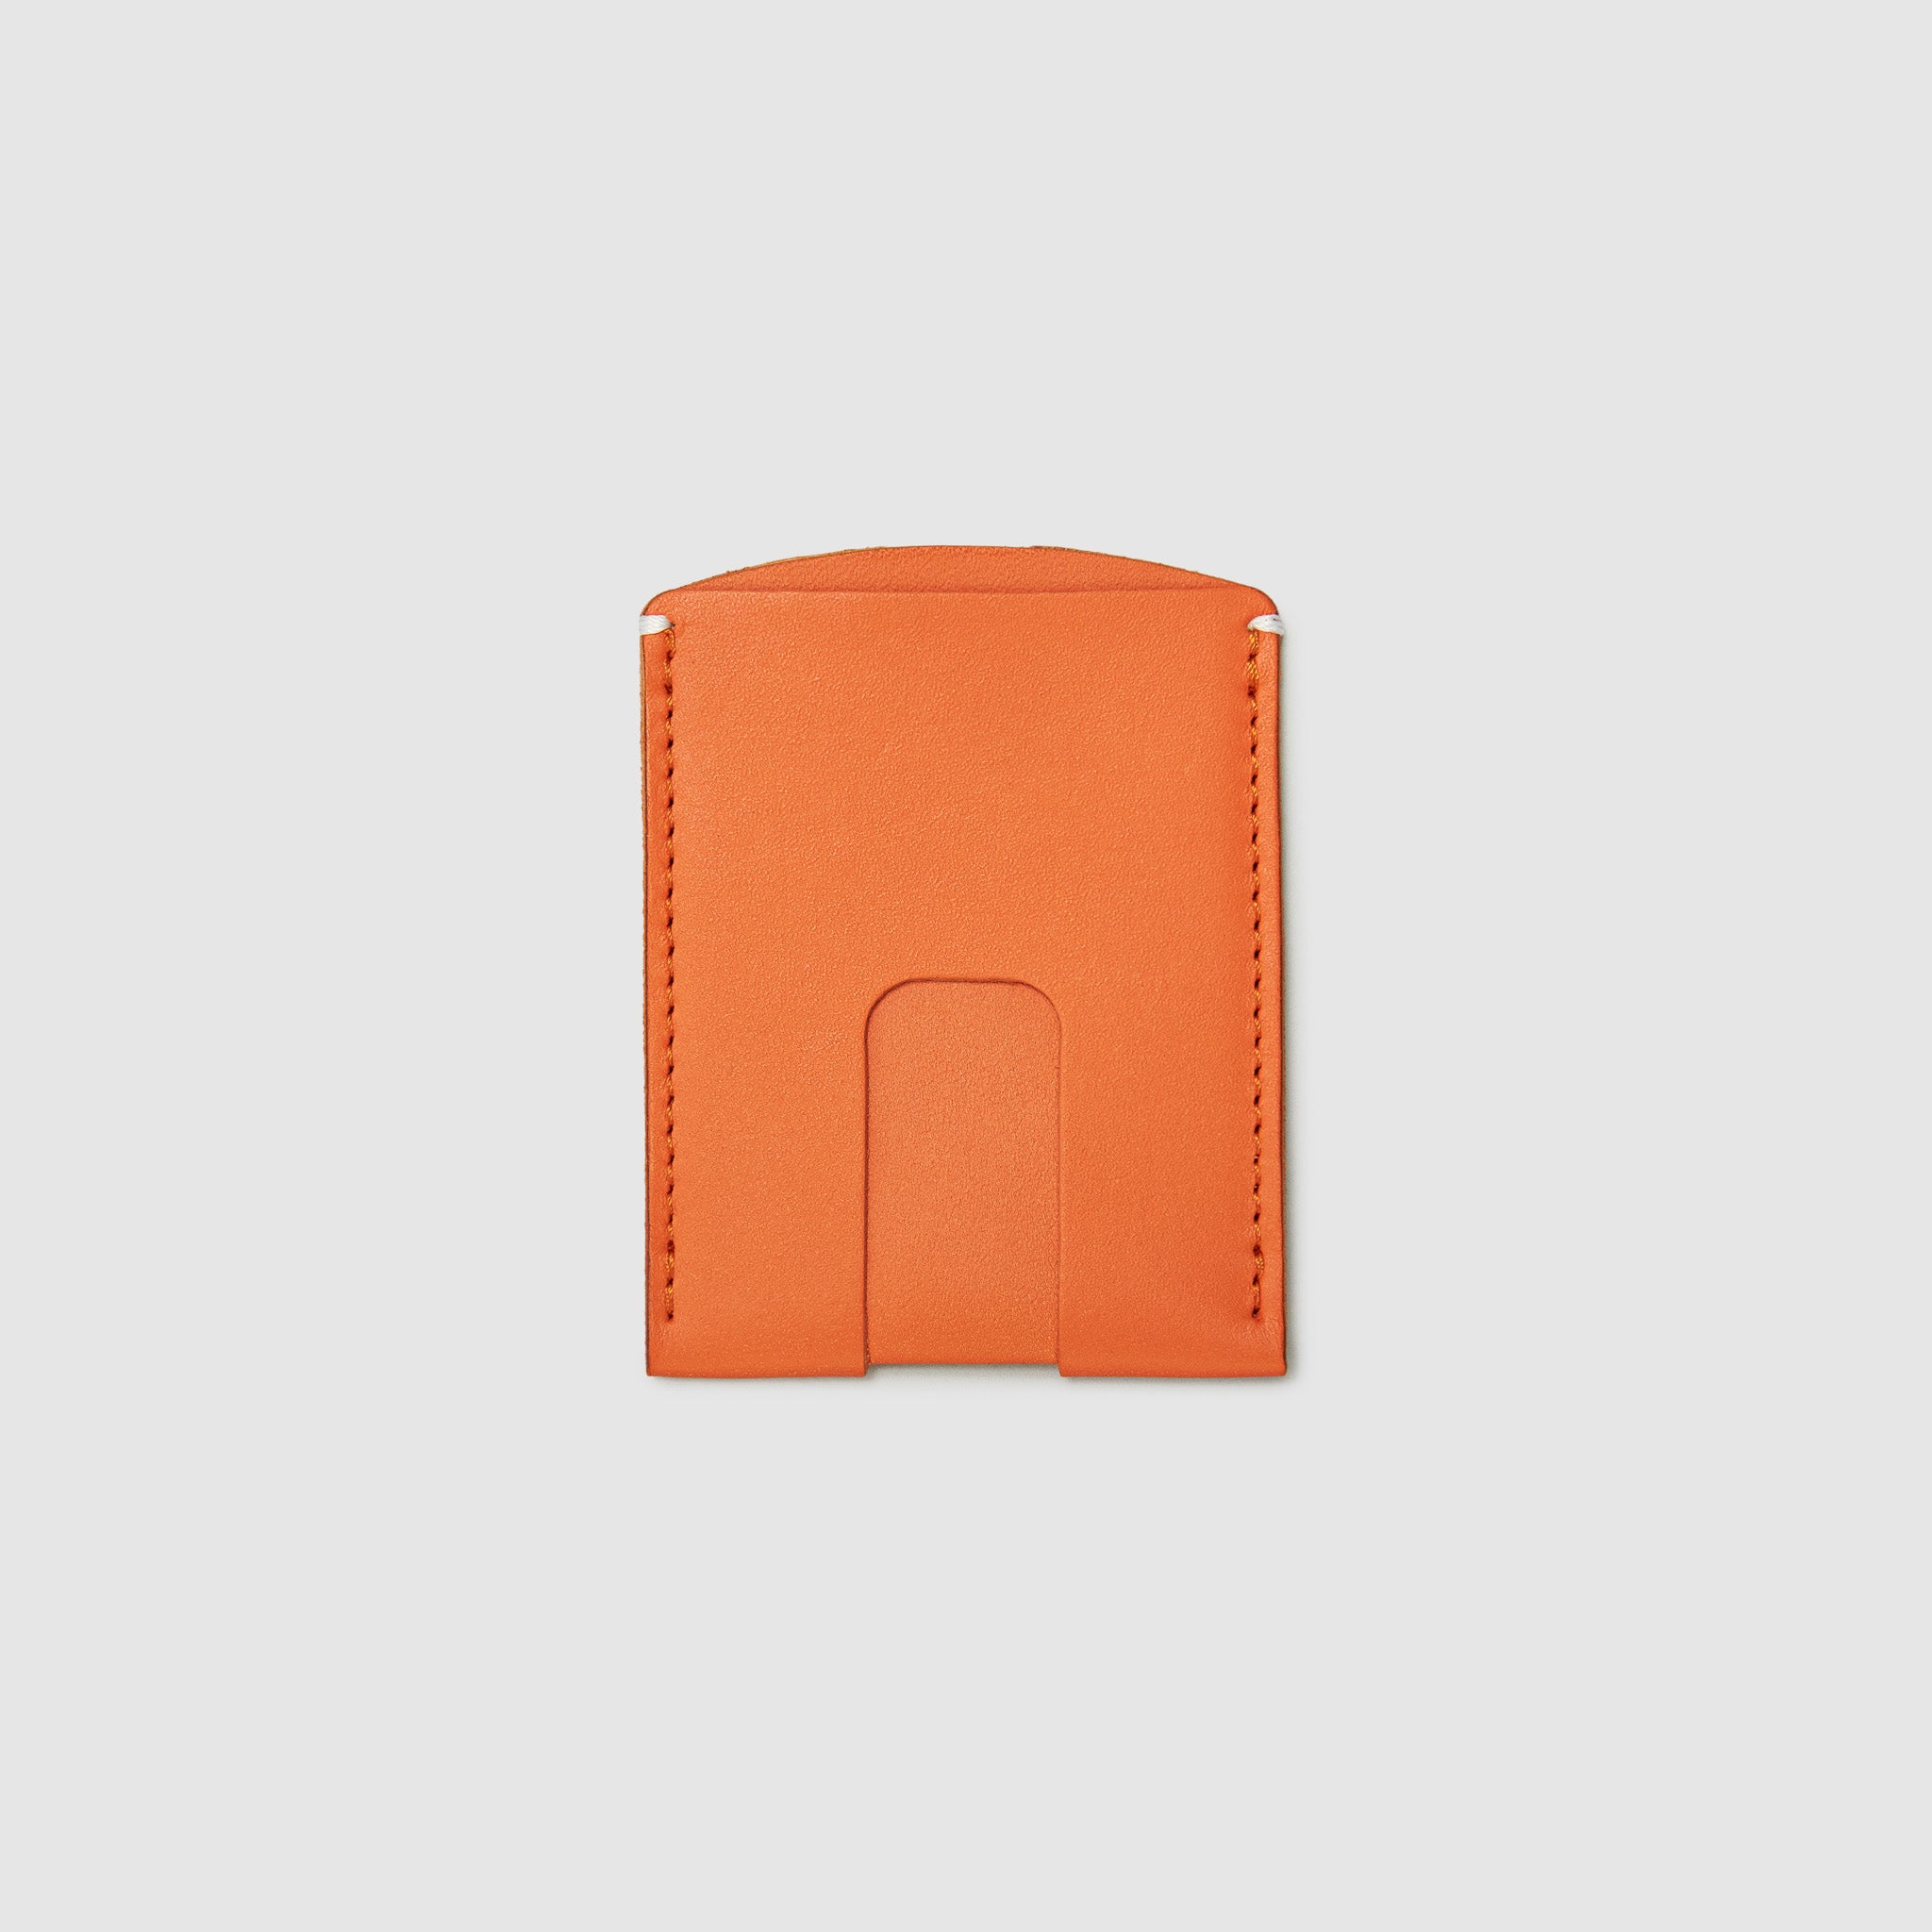 Anson Calder Card Holder Wallet french calfskin leather with cash slot _fshd-orange